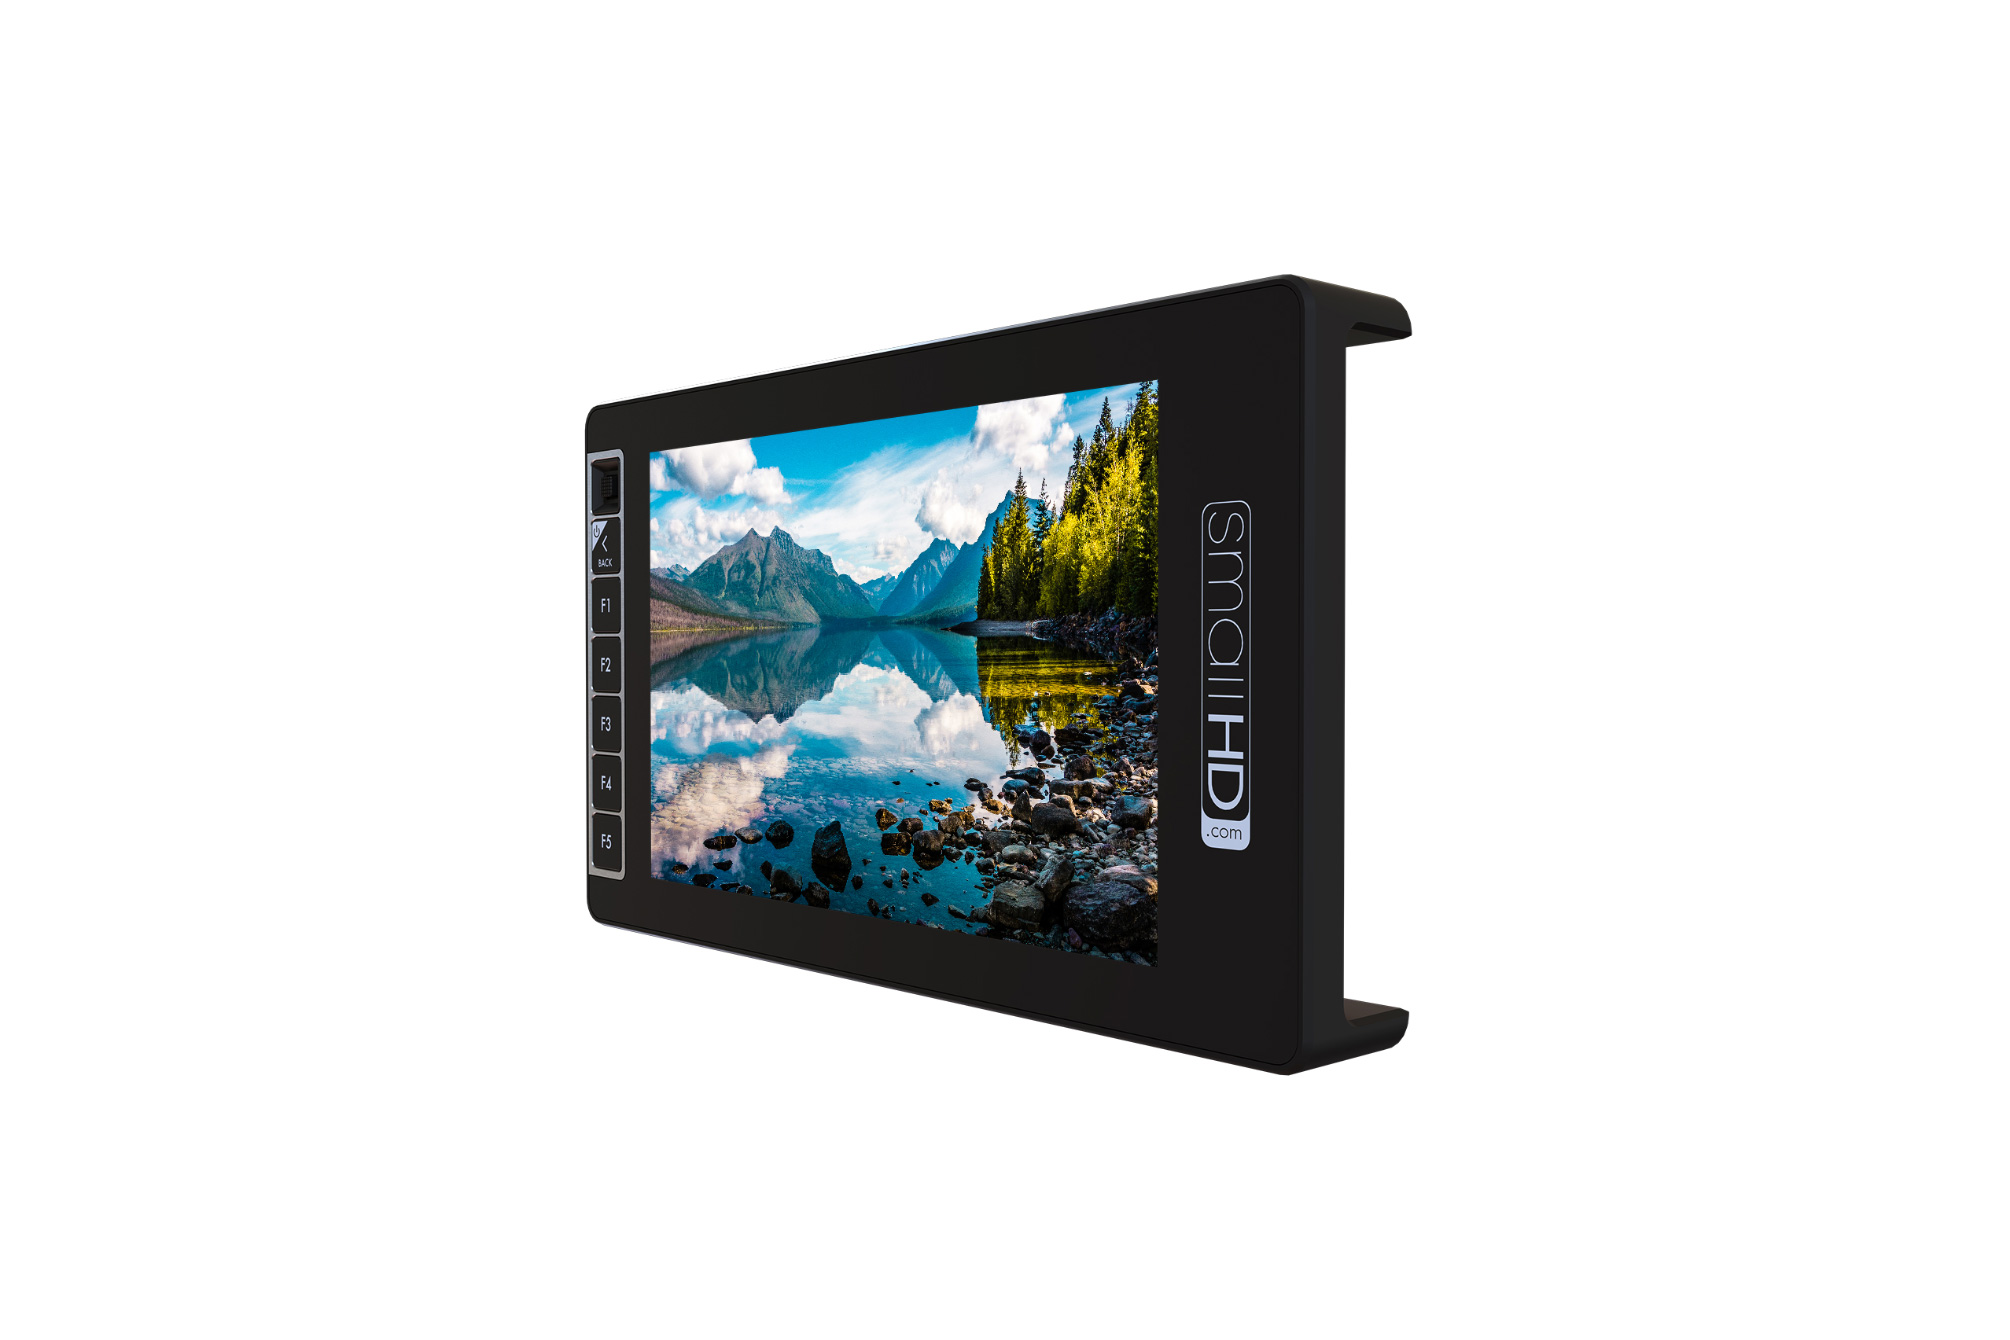 SmallHD 703 7" Ultra-Bright Full-HD Field Monitor with HD-SDI/HDMI and 2200Nits